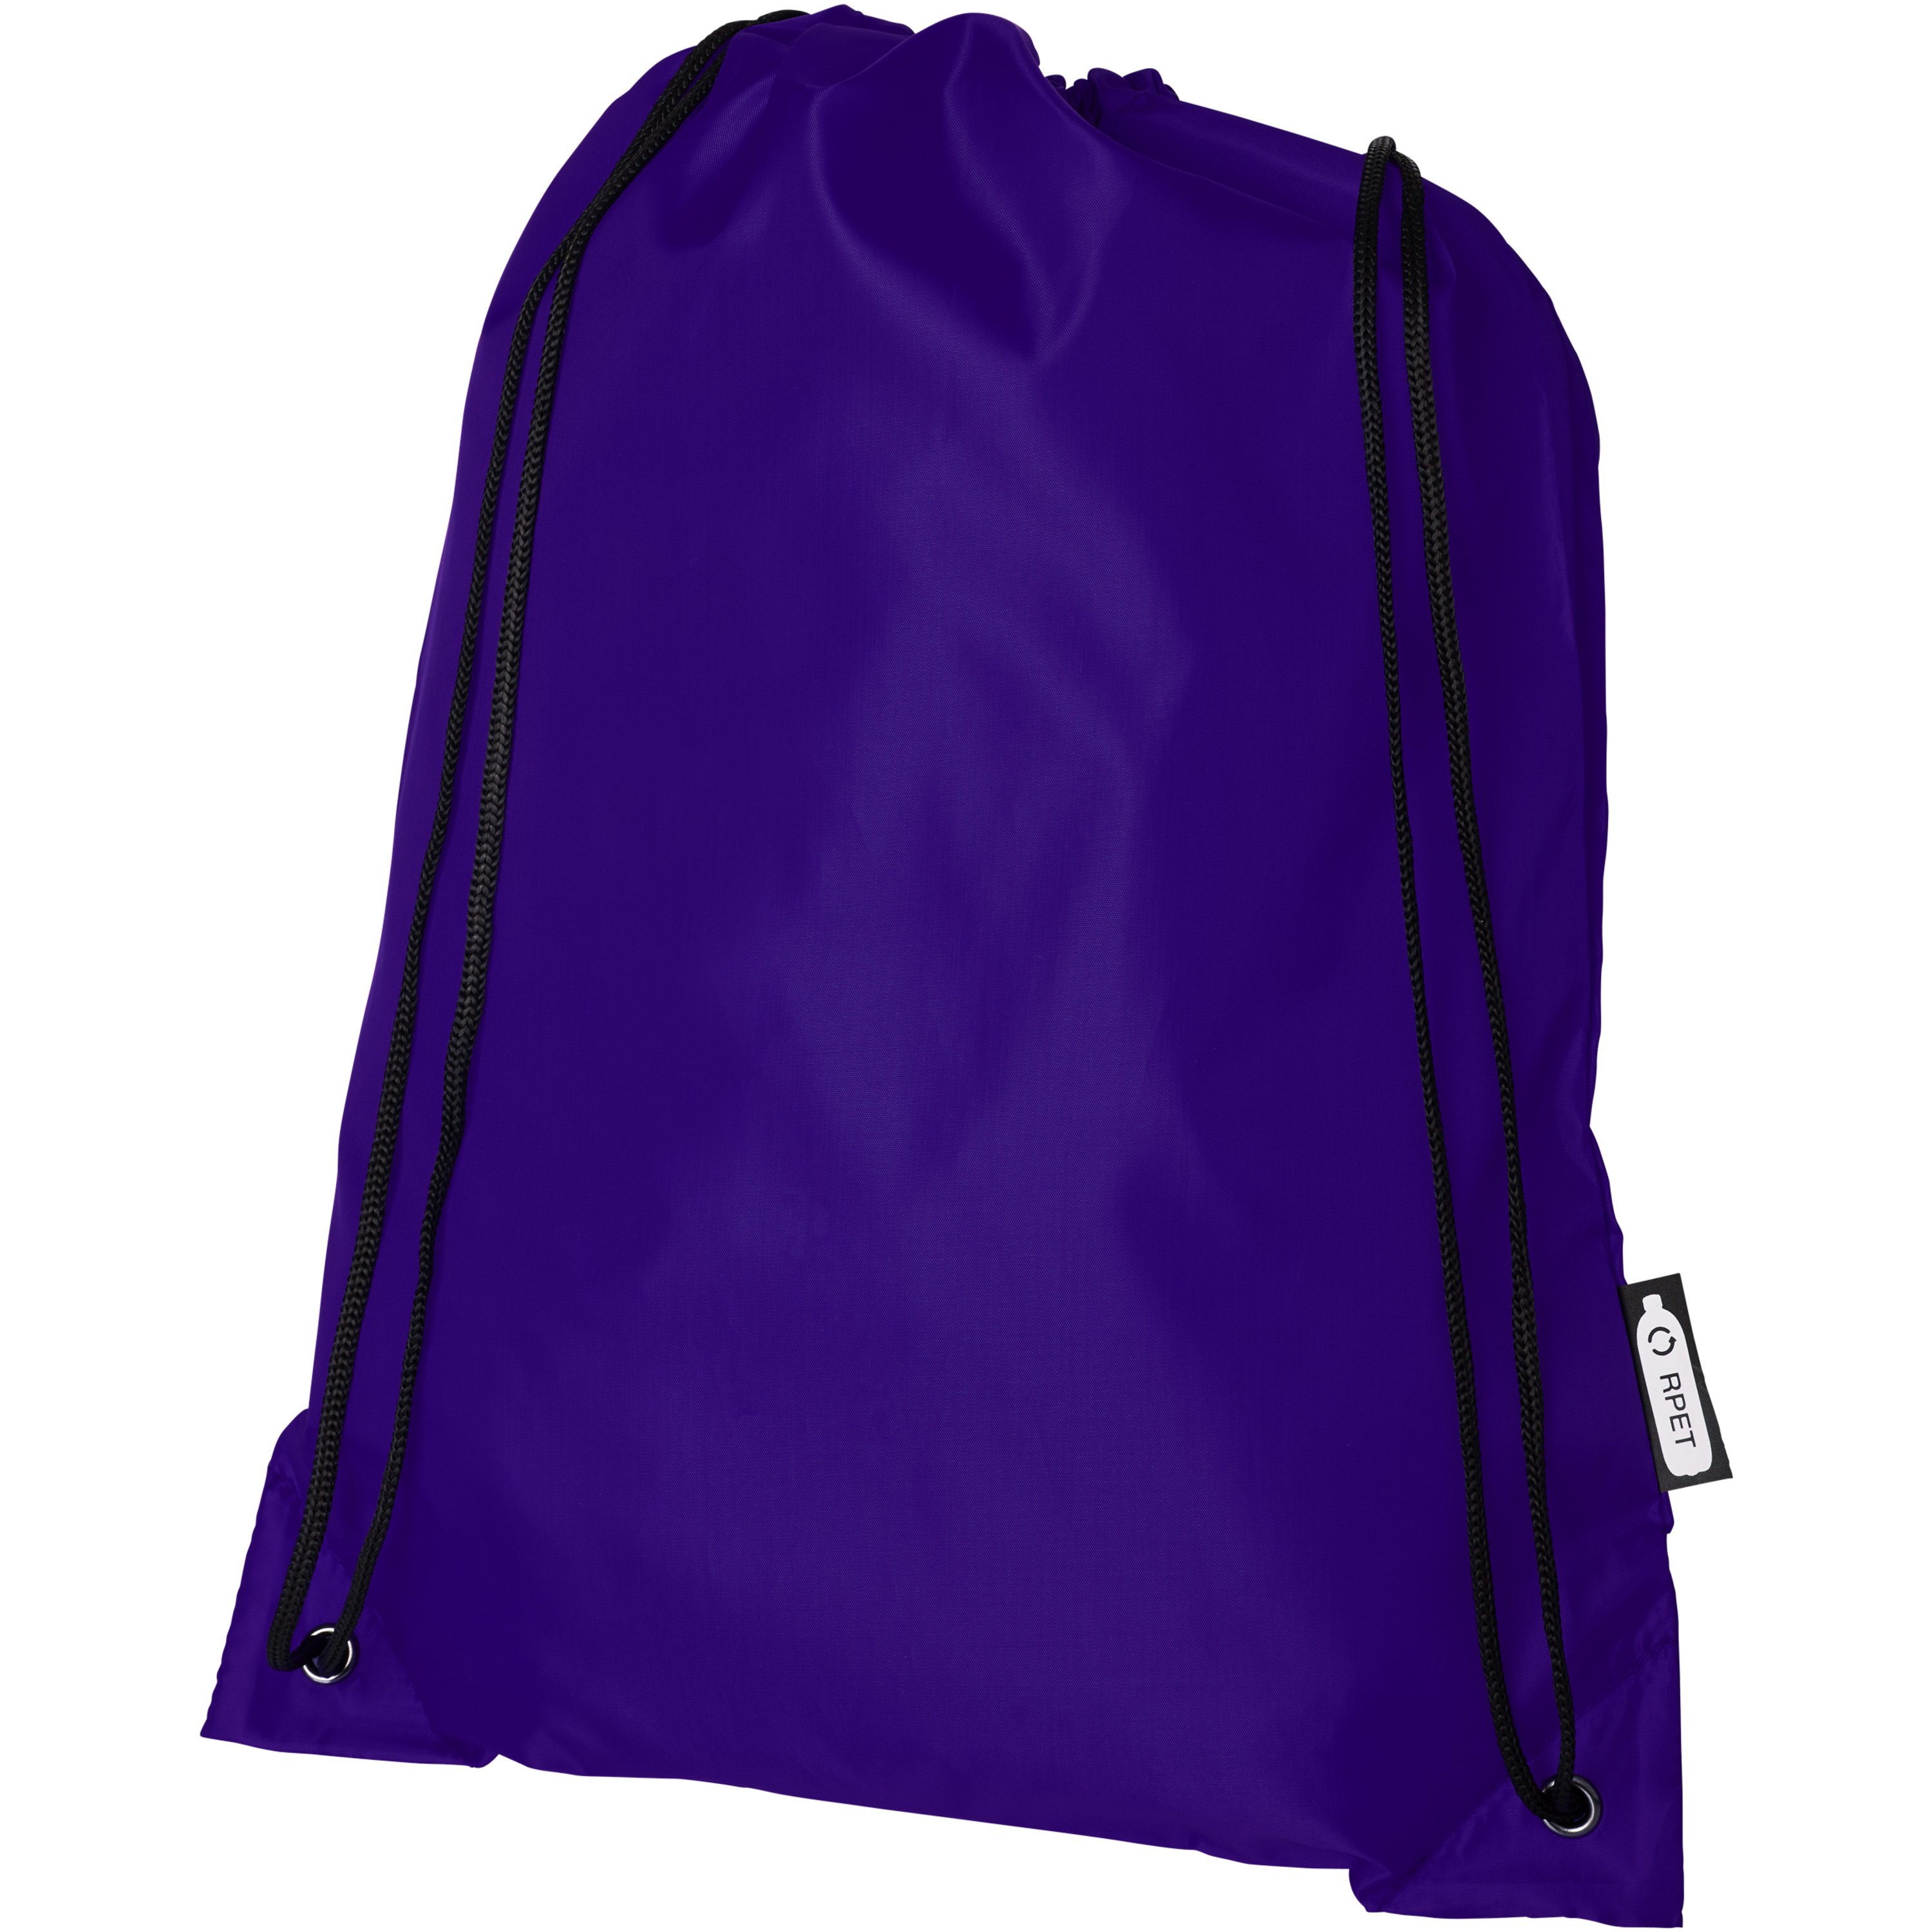 Oriole RPET drawstring backpack 5L